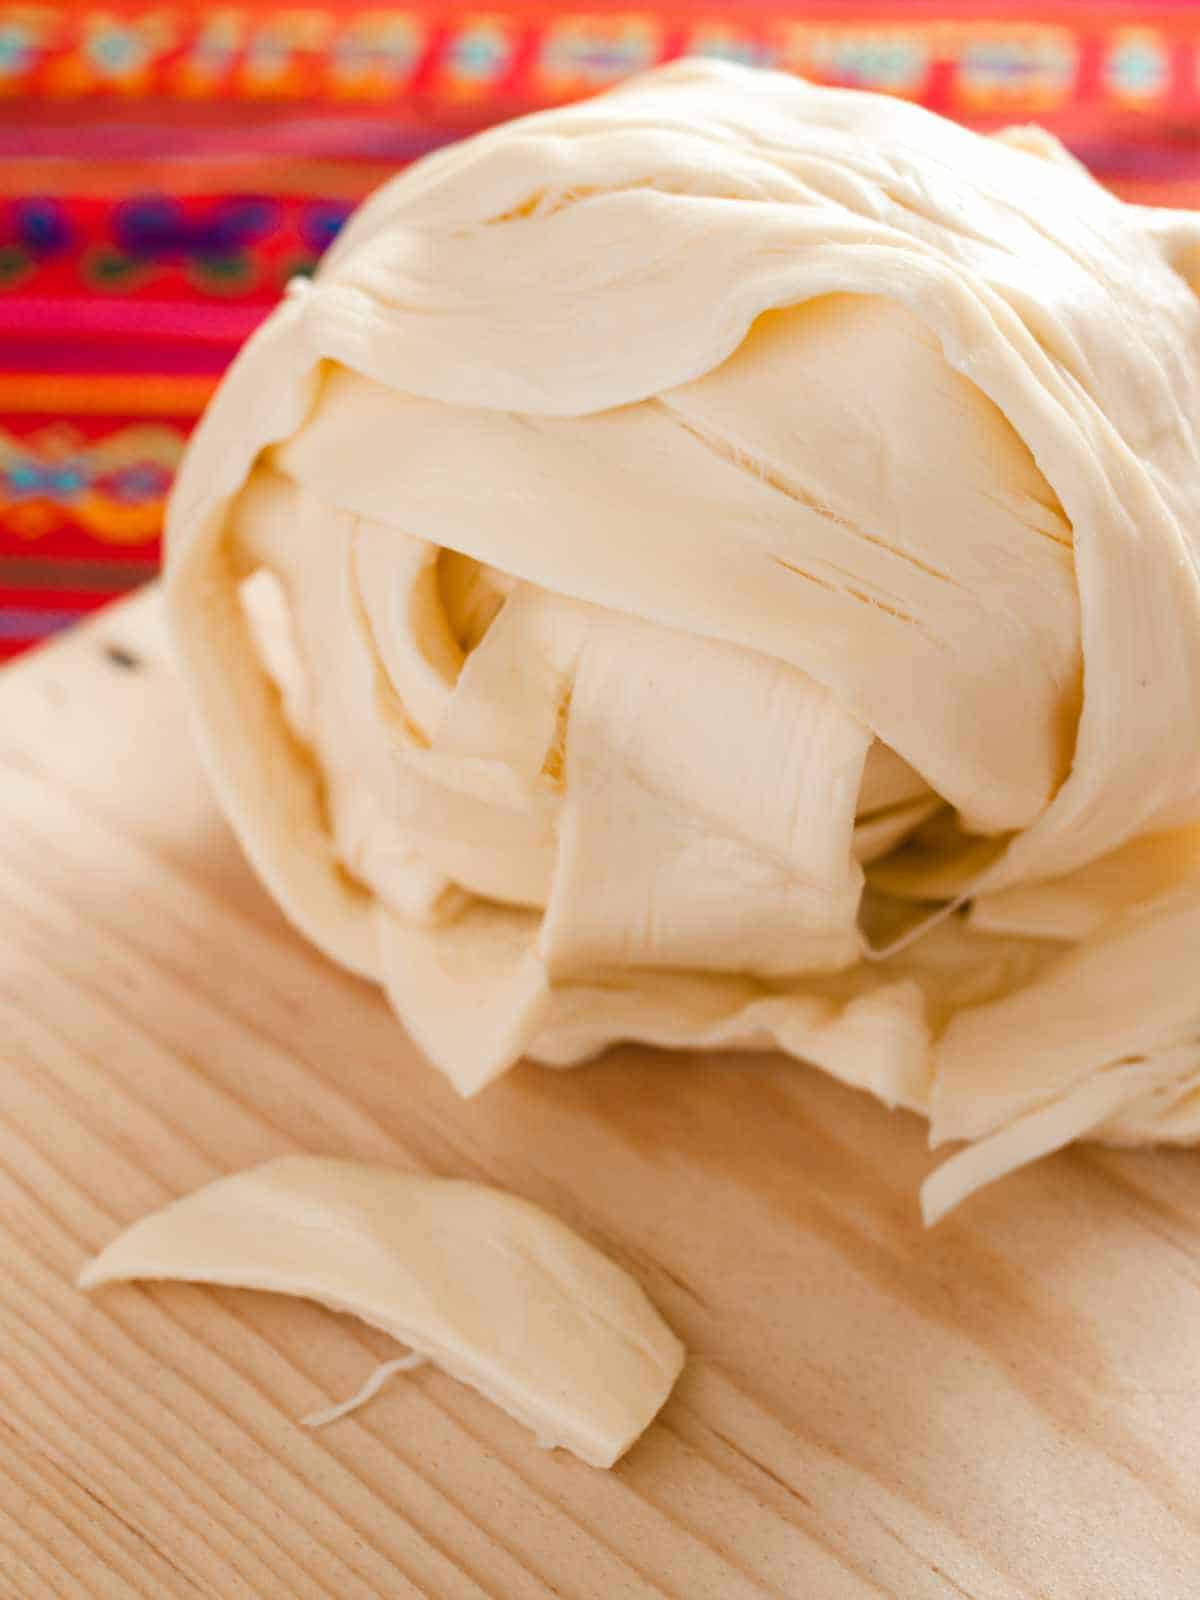 Oaxaca cheese on a cutting board.